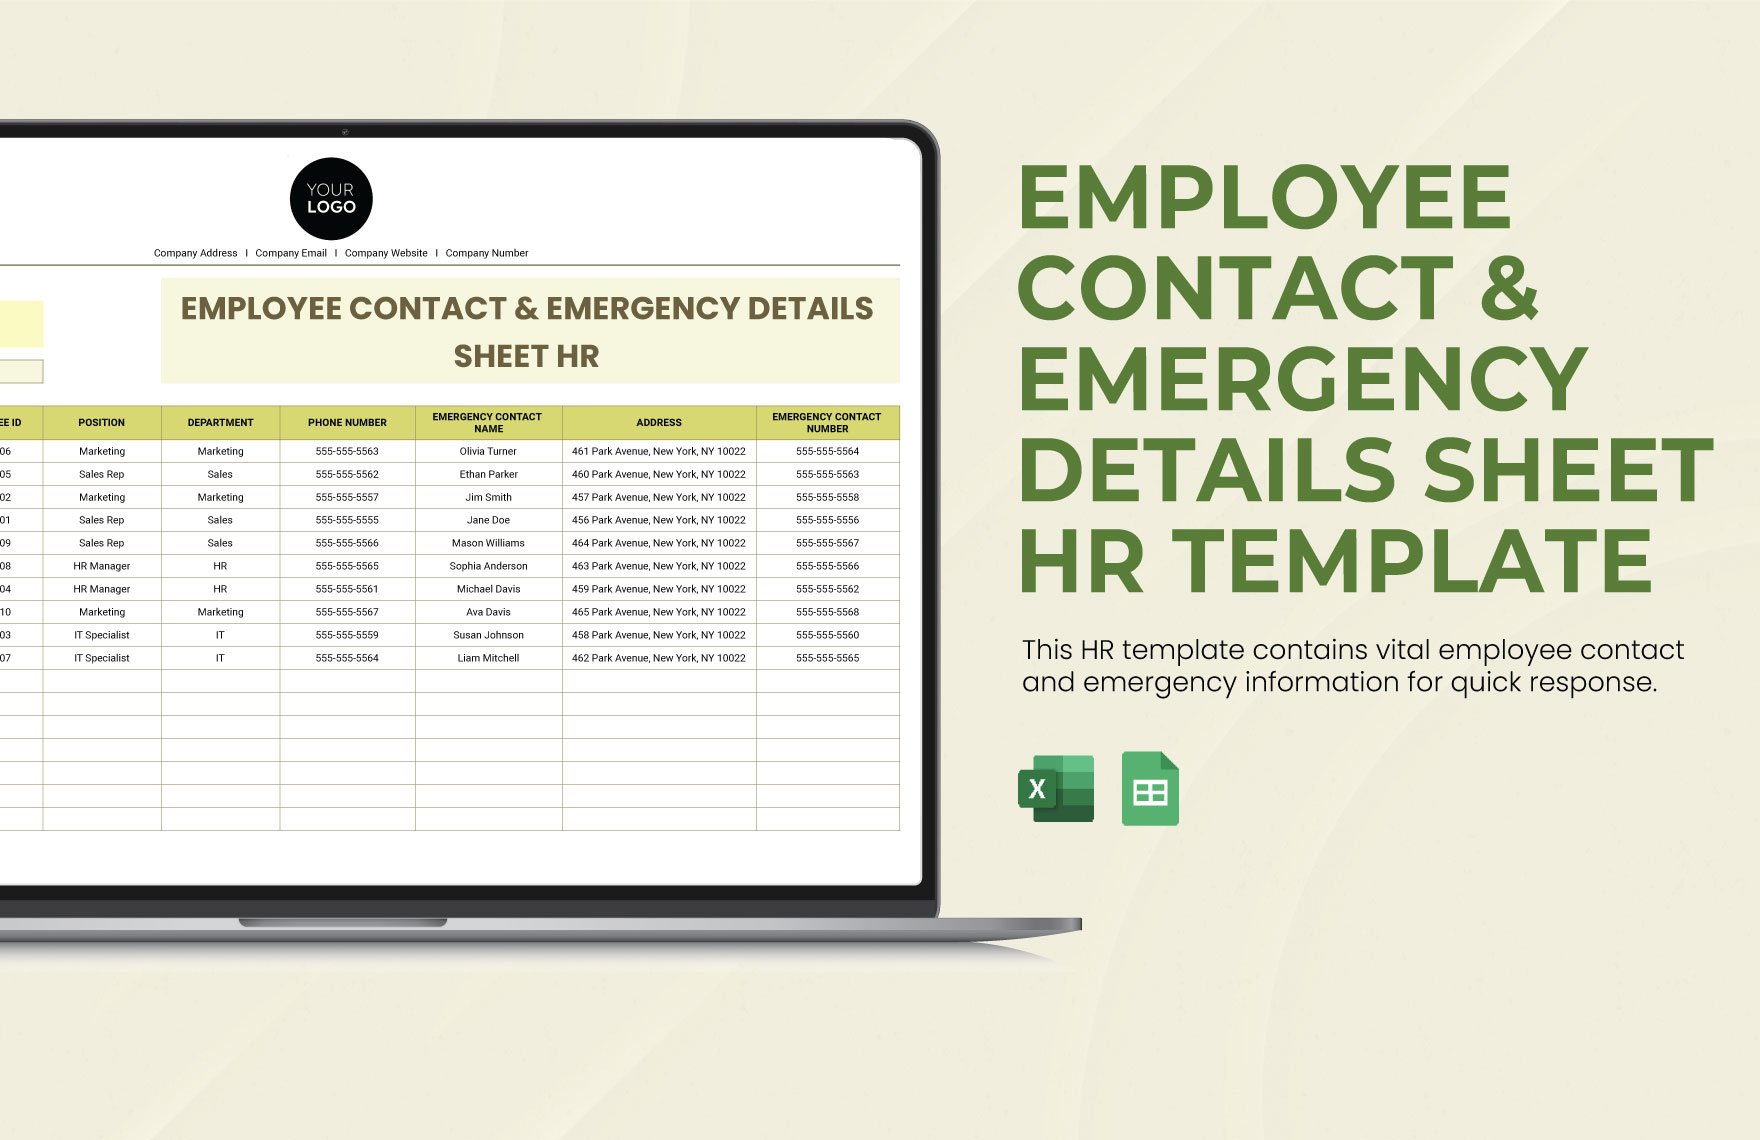 Employee Contact & Emergency Details Sheet HR Template